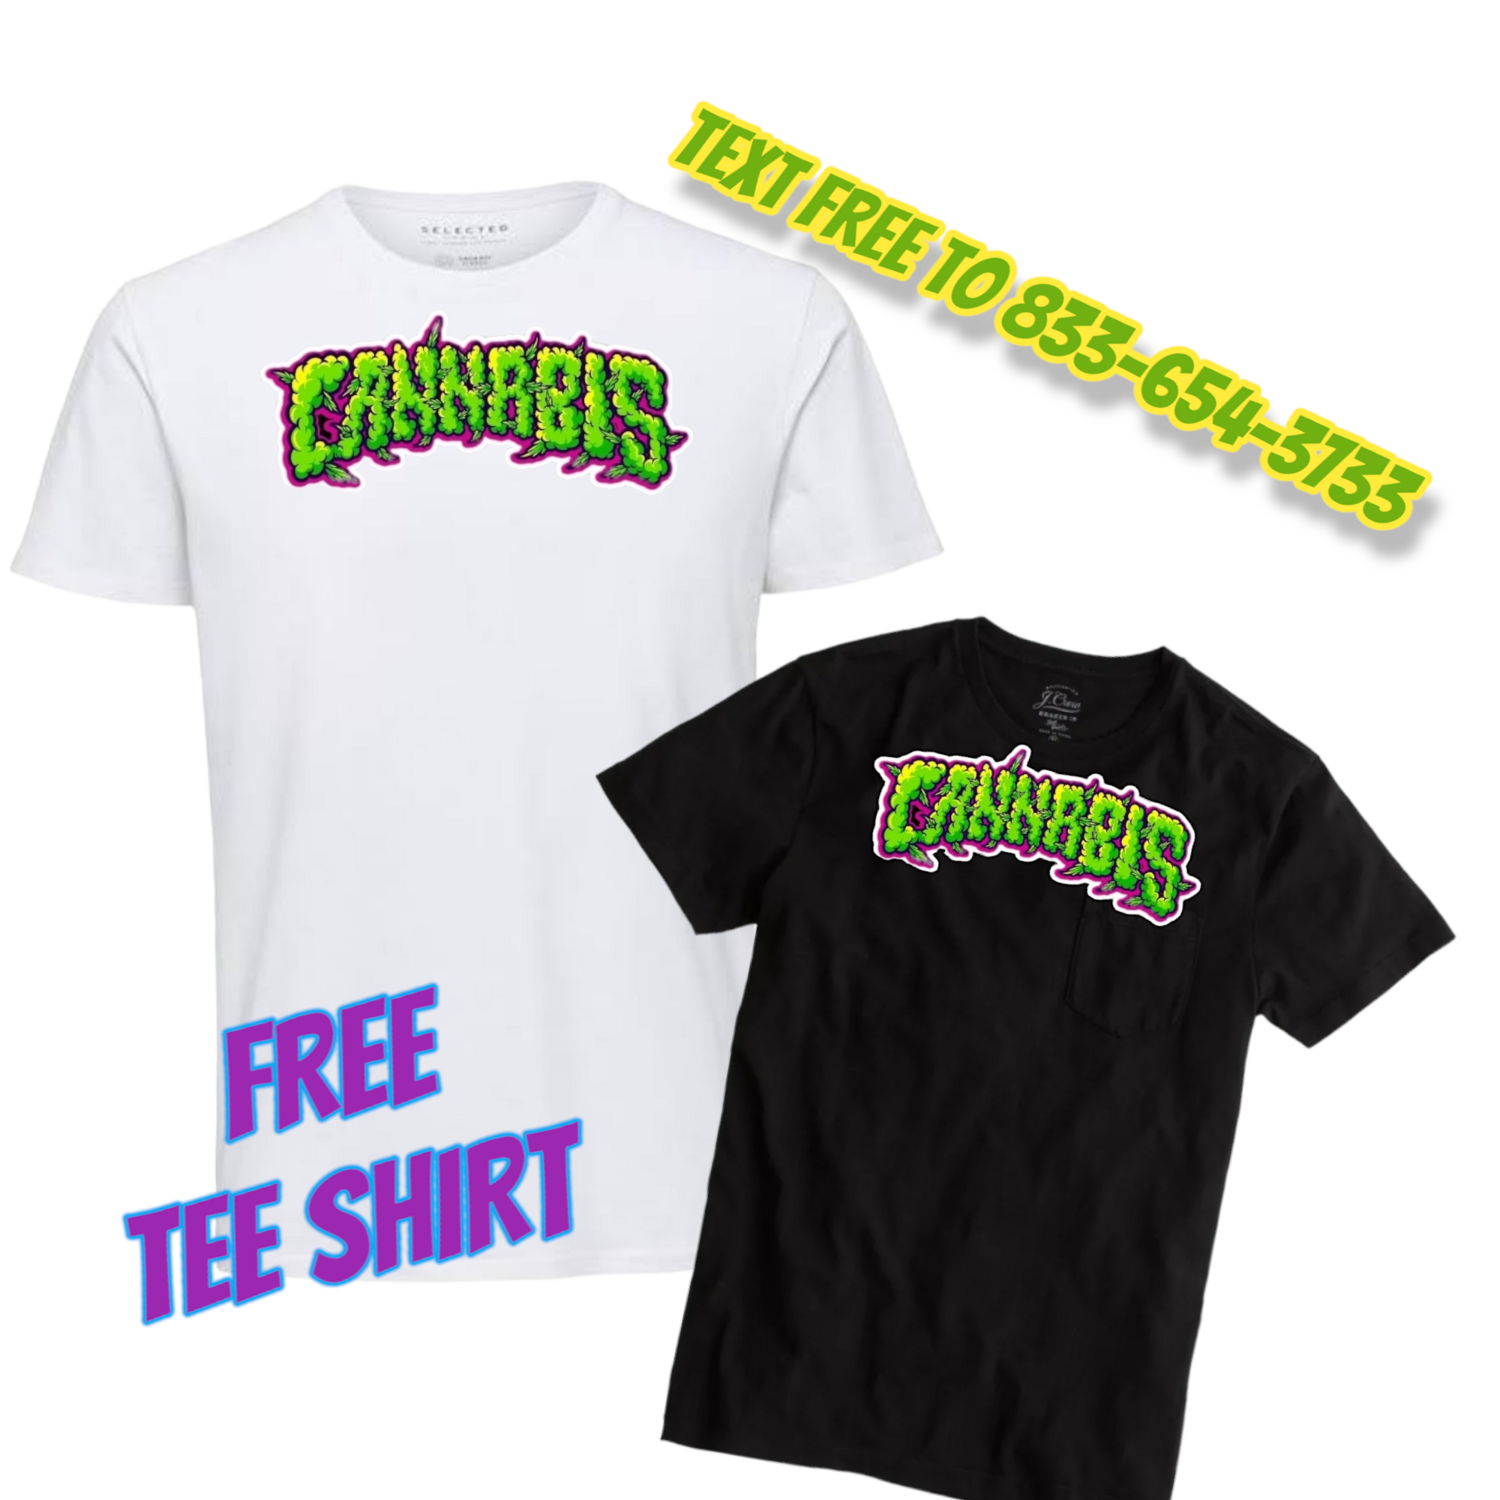 Free tee shirt   canna